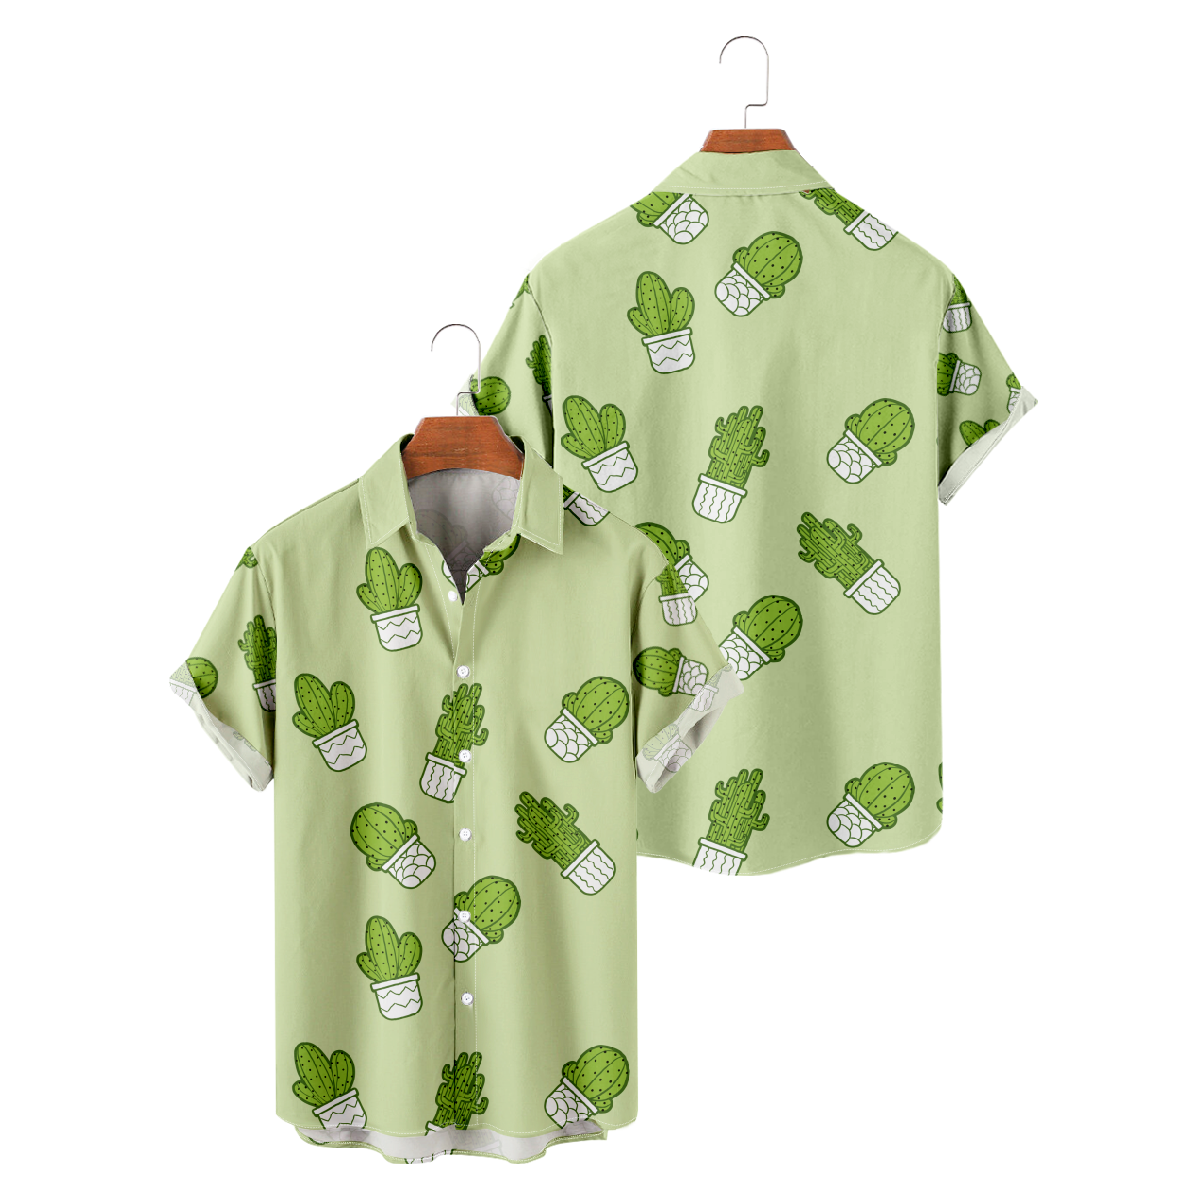 Mens Short Sleeve Shirt Cactus Print Button Up Shirt uhoodie Casual Tops